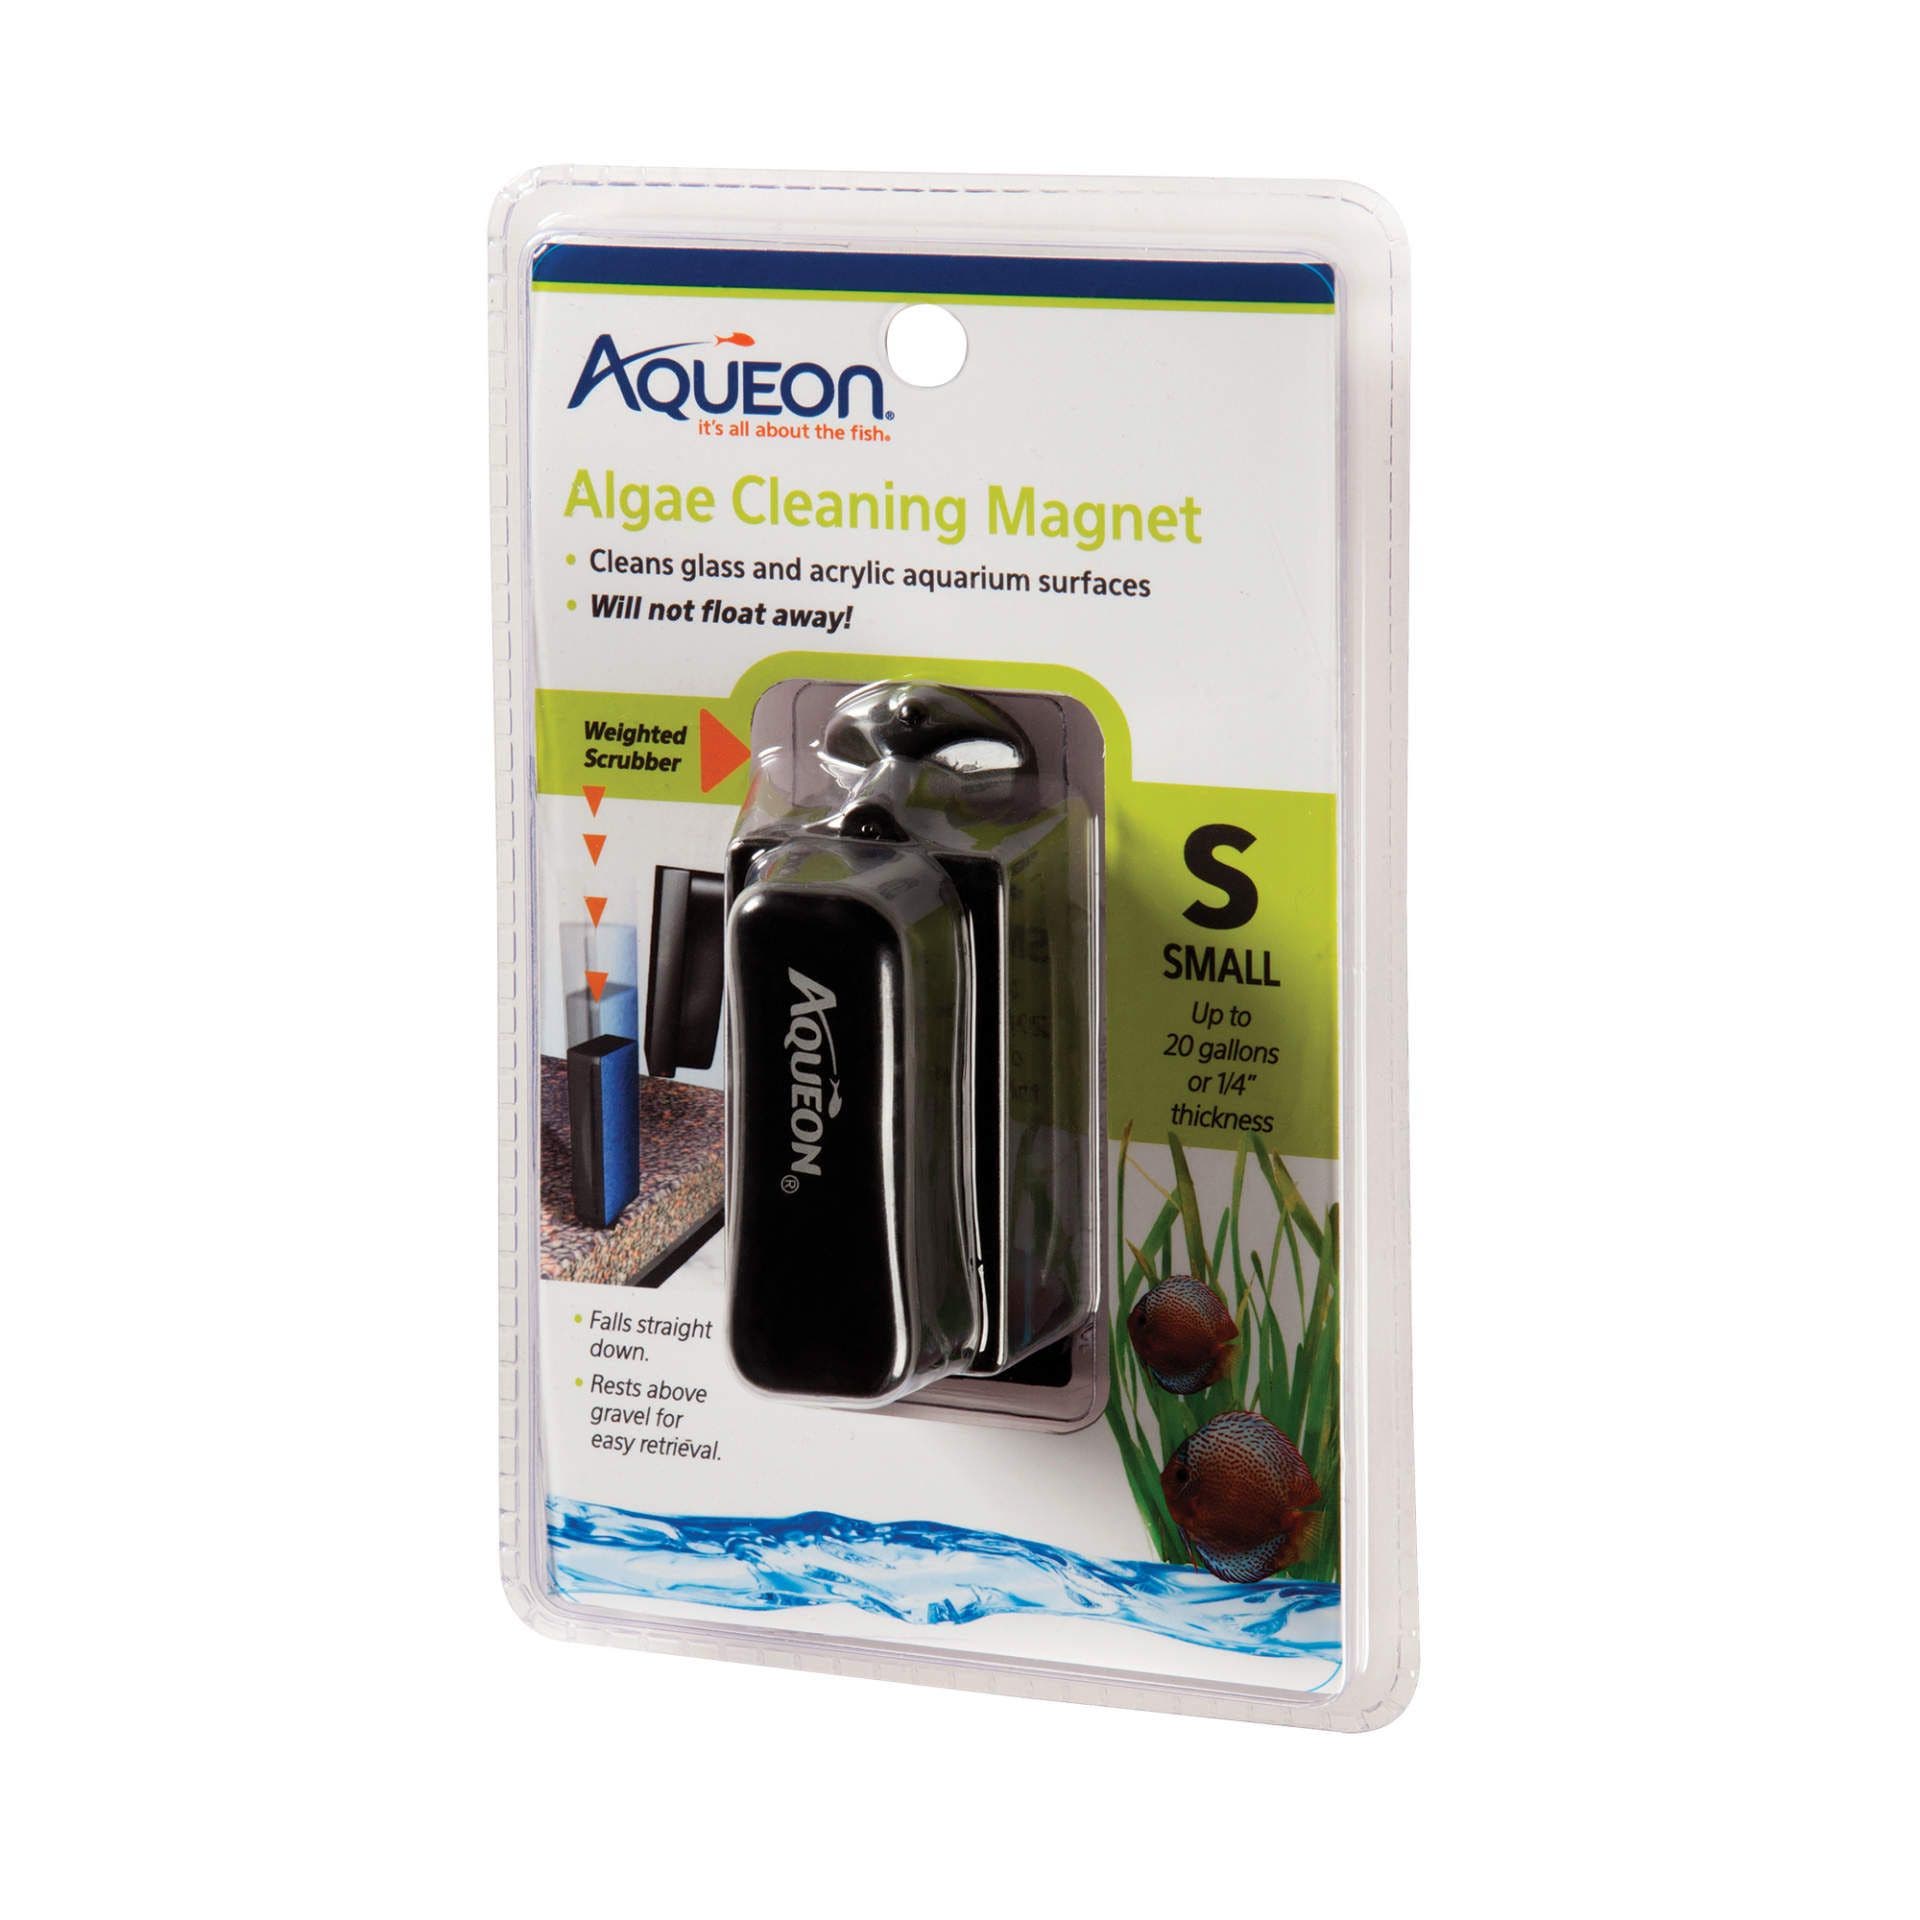 Aqueon algae cleaning magnet small fish